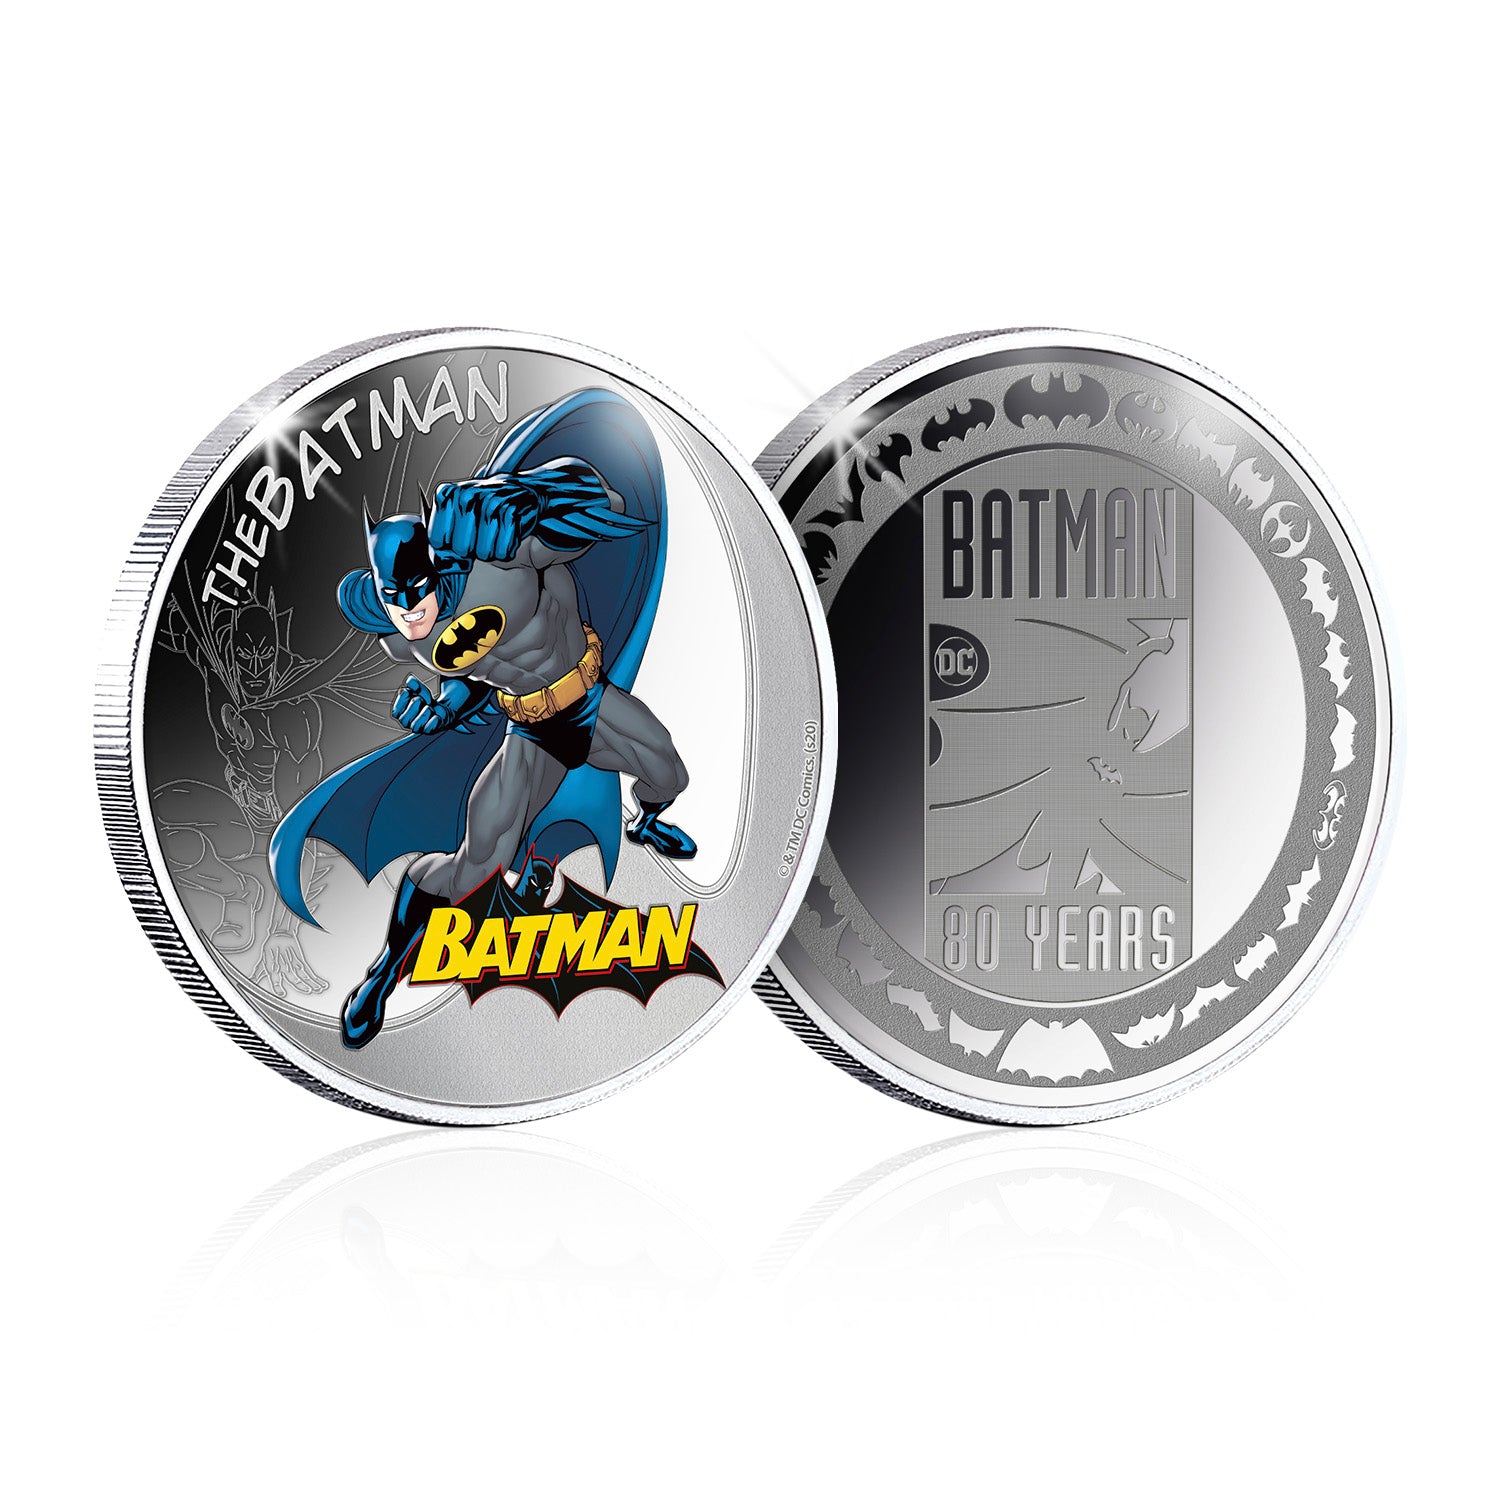 Batman Punch Silver-Plated Commemorative